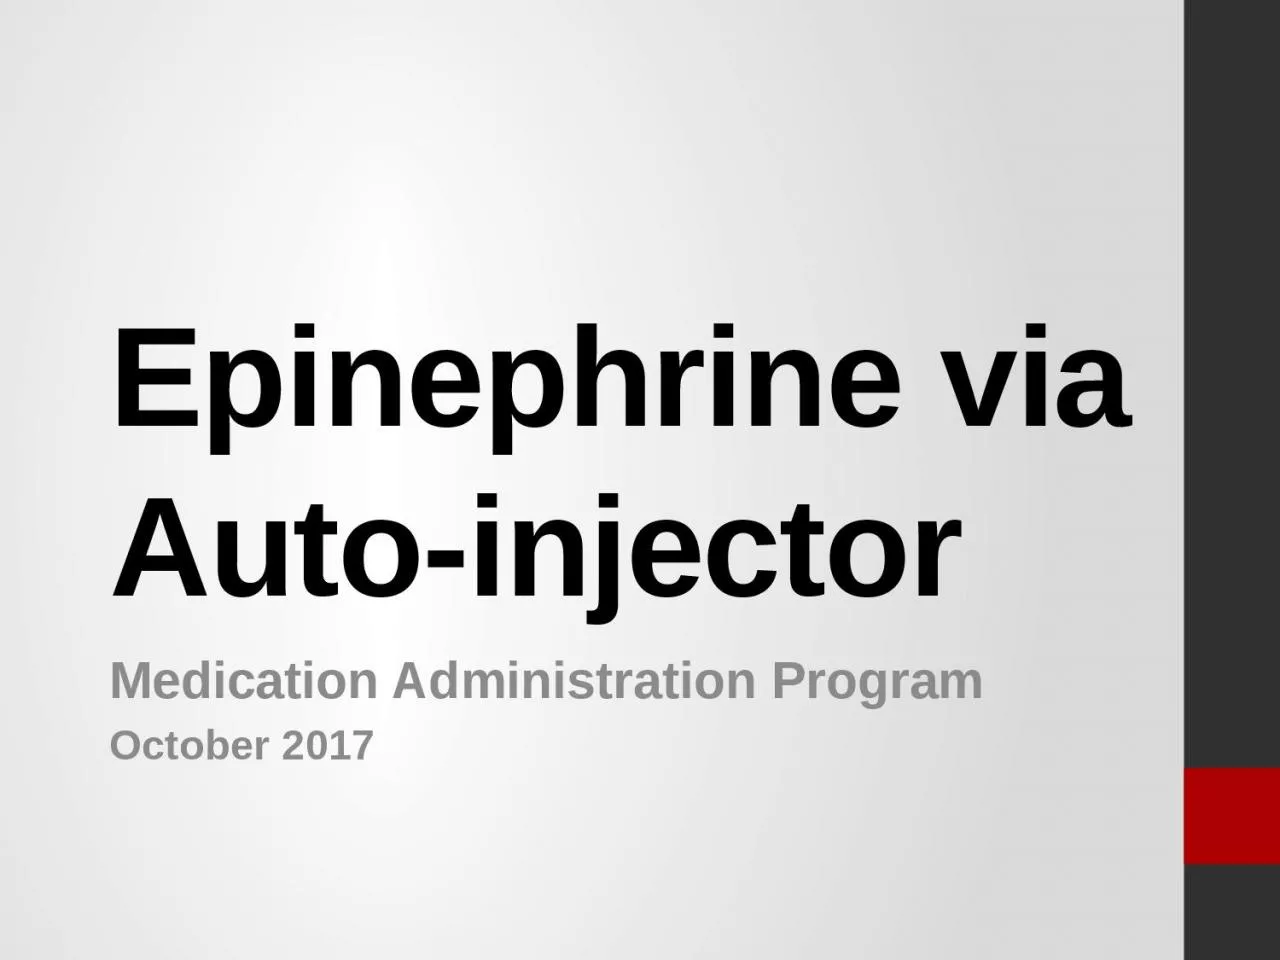 Epinephrine via Auto-injector